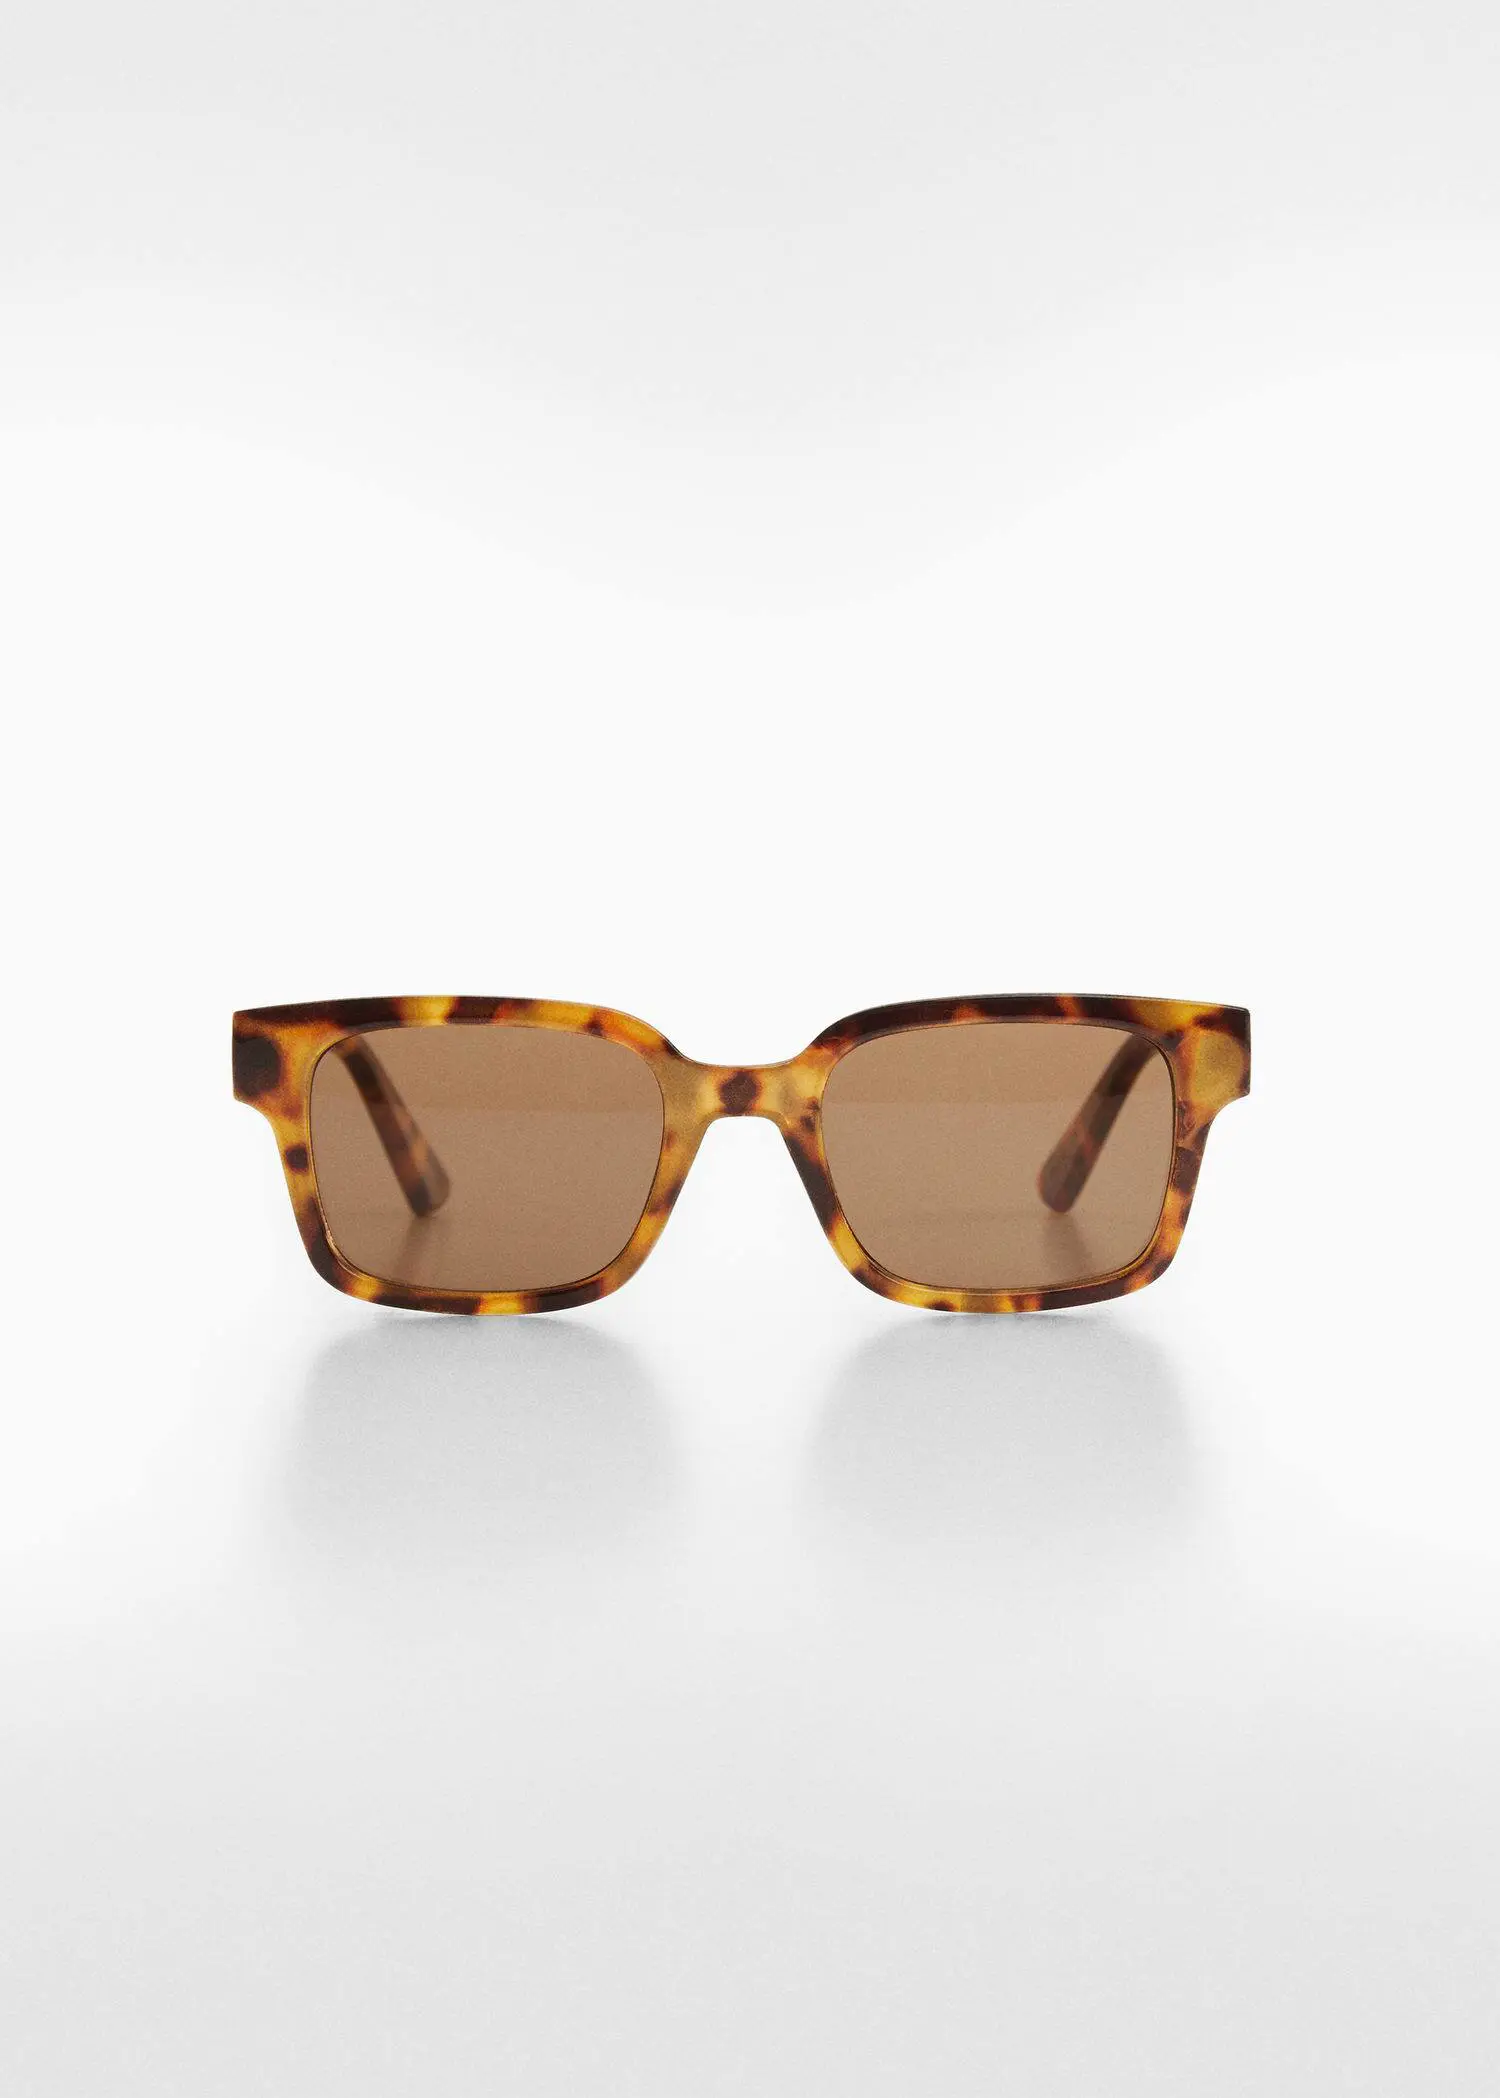 Mango Square sunglasses. 1